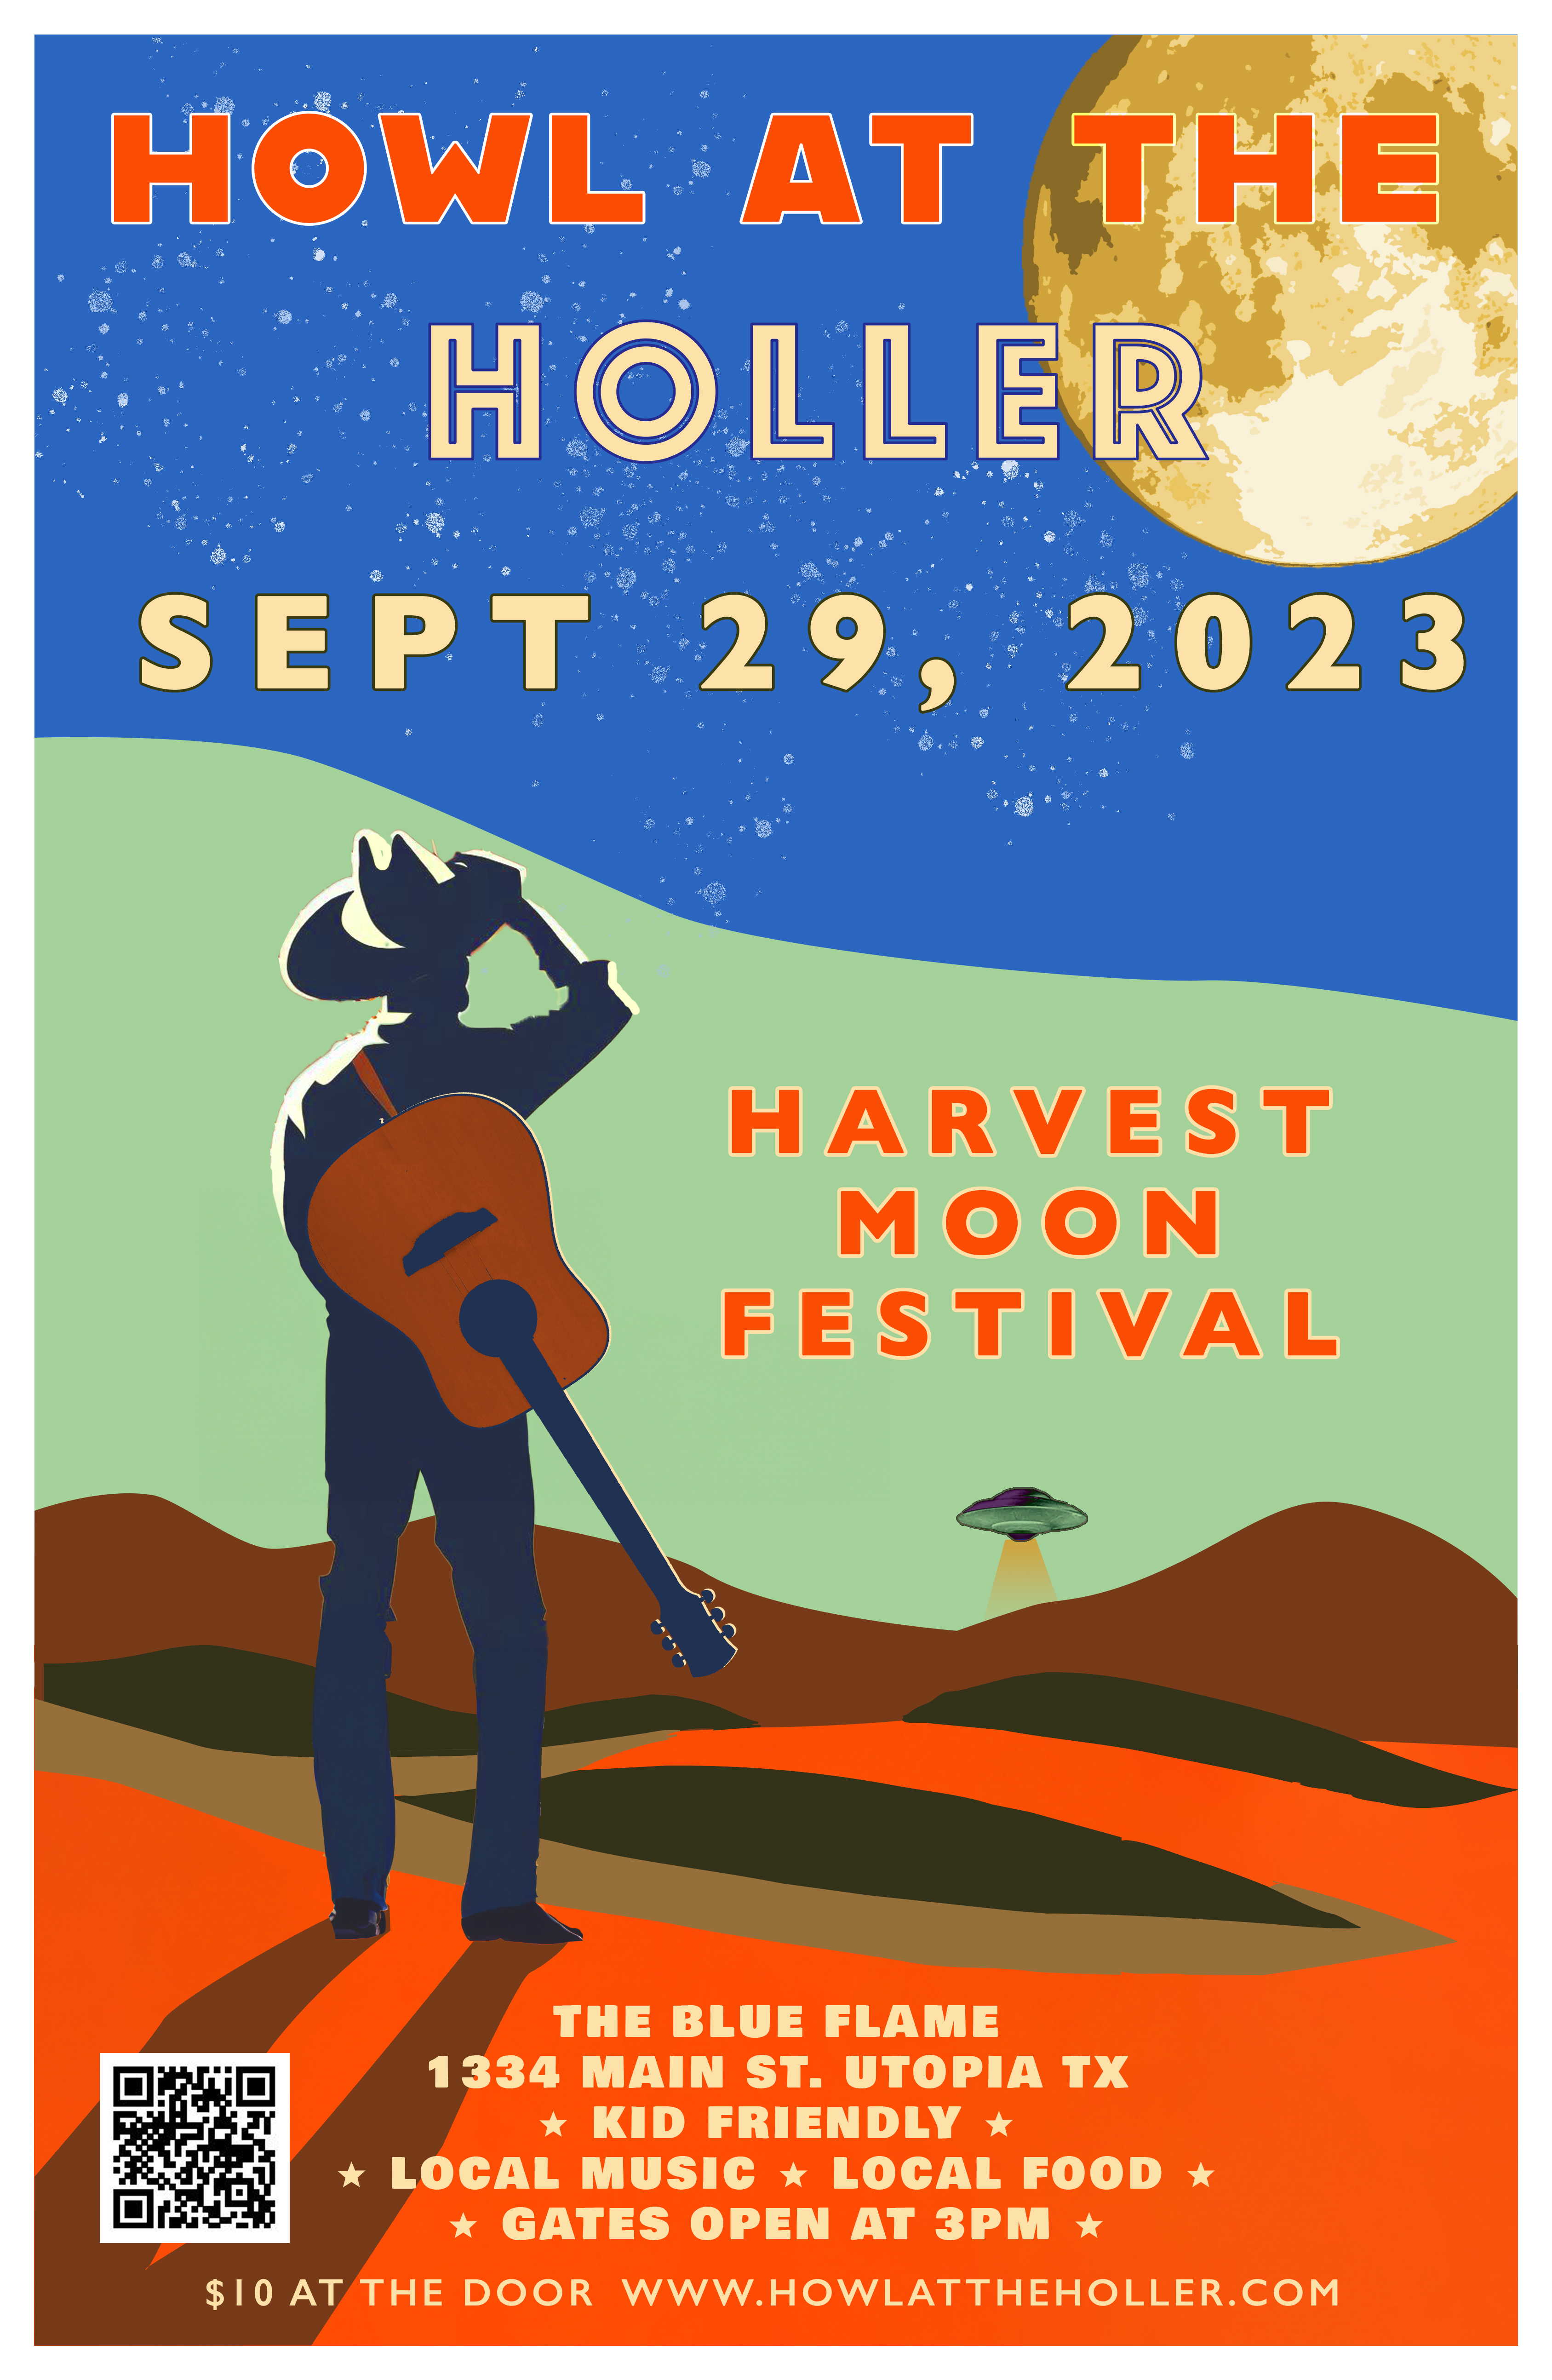 Utopia Texas Harvest moon festival buy tickets